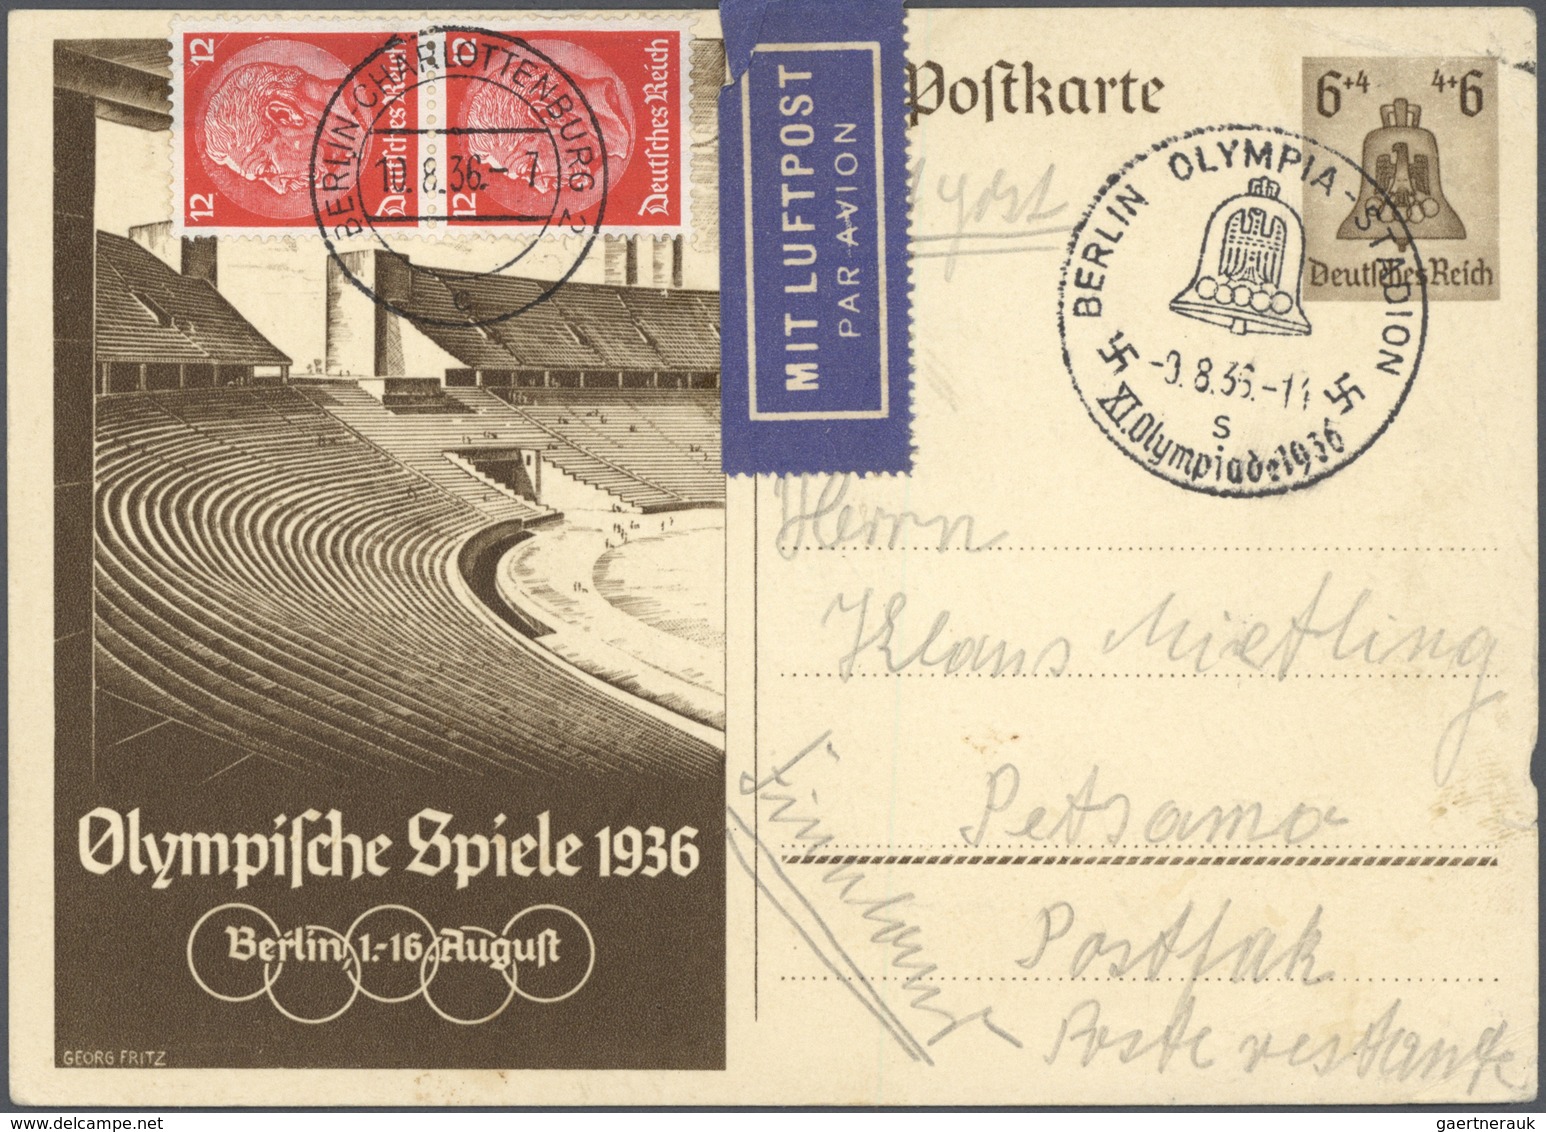 25270 Thematik: Olympische Spiele / olympic games: 1936, Olympia Ganzsachenkarton 6 Pfg. bzw. 15 Pfg. aus